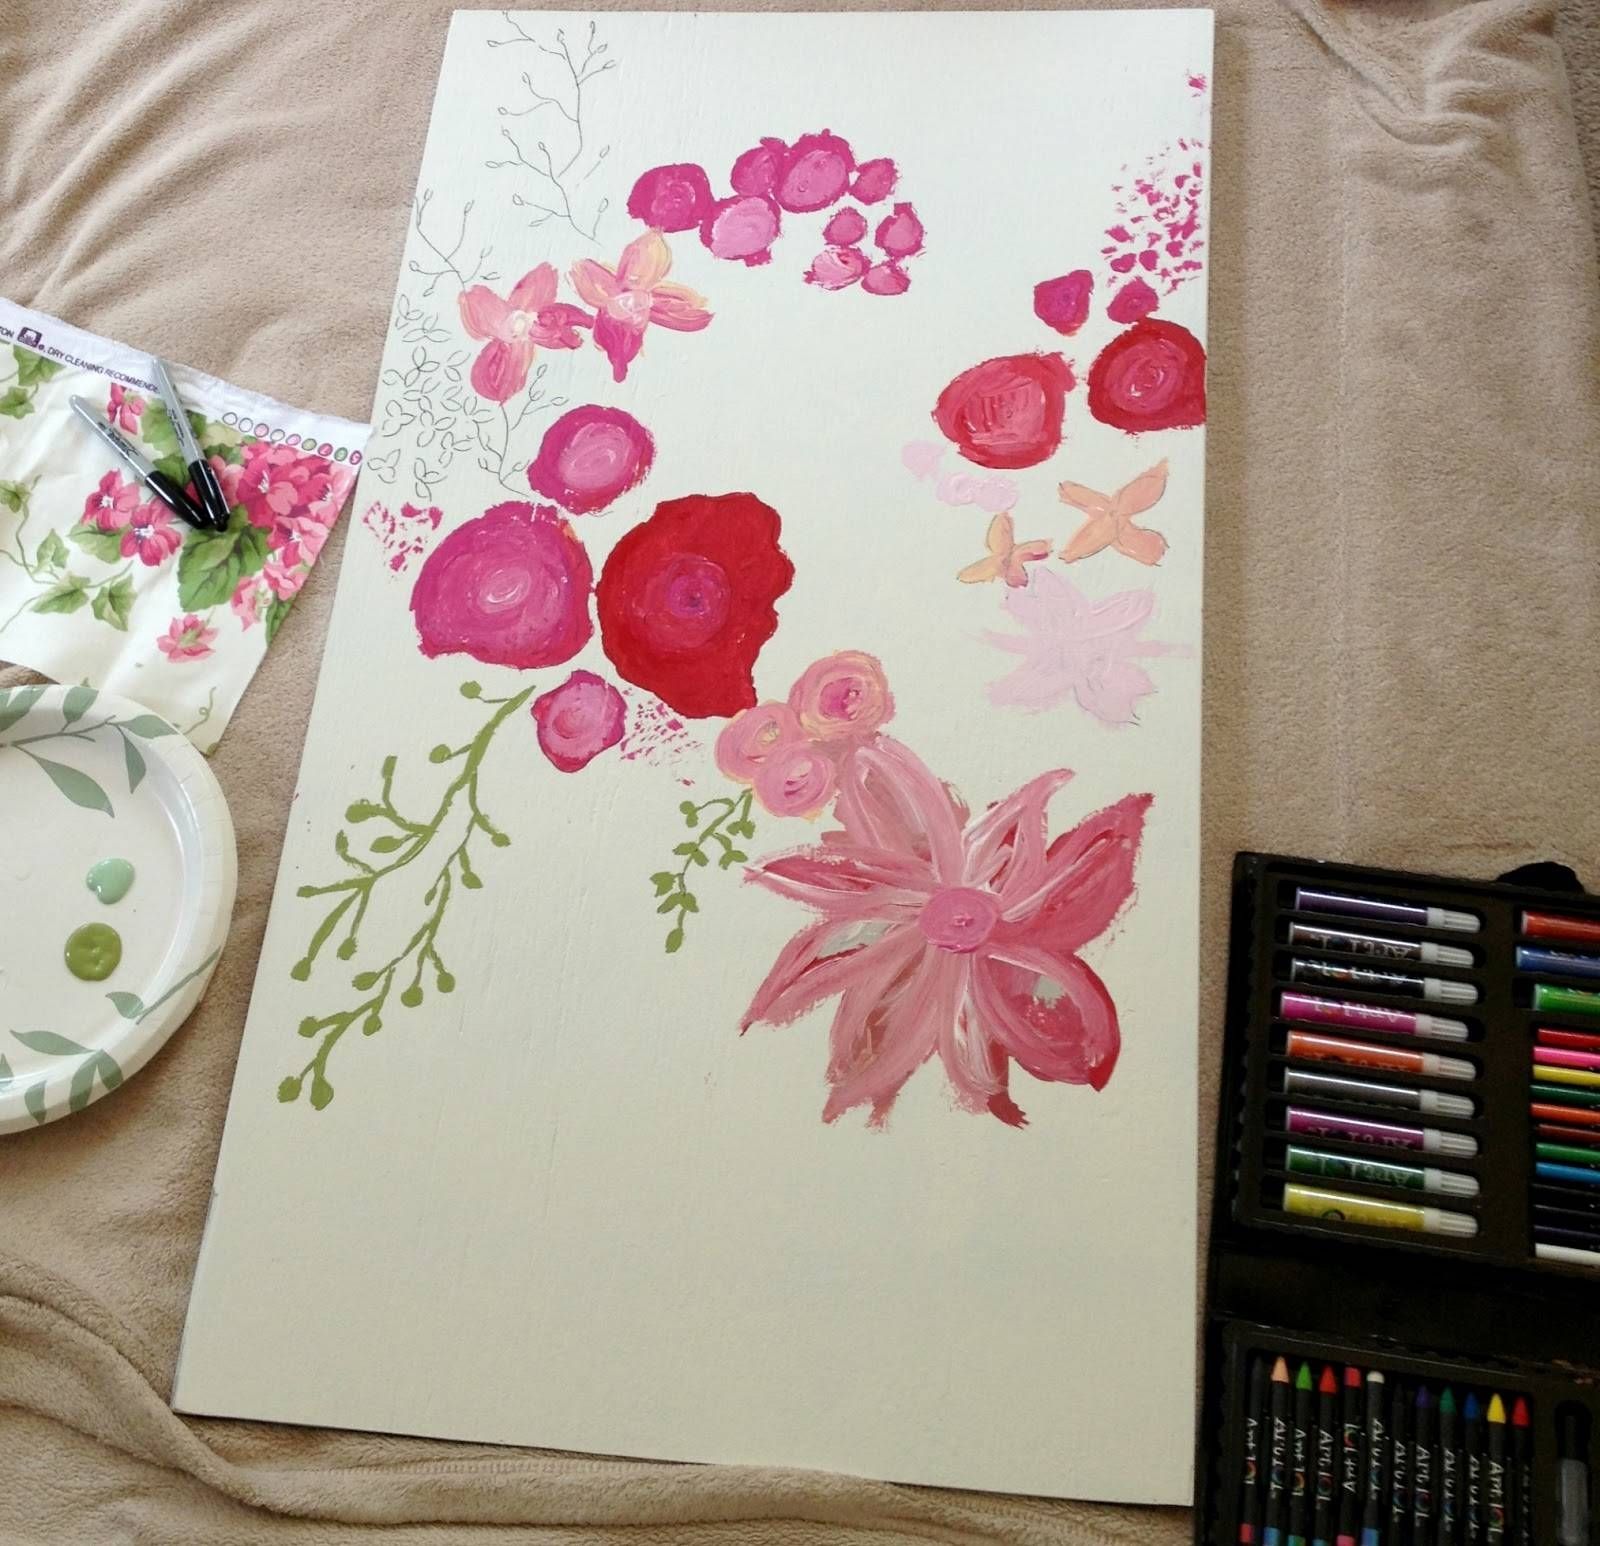 Diy Floral Wall Art With Nailhead Trim | Livelovediy | Bloglovin' Inside Current Pink Flower Wall Art (View 11 of 20)